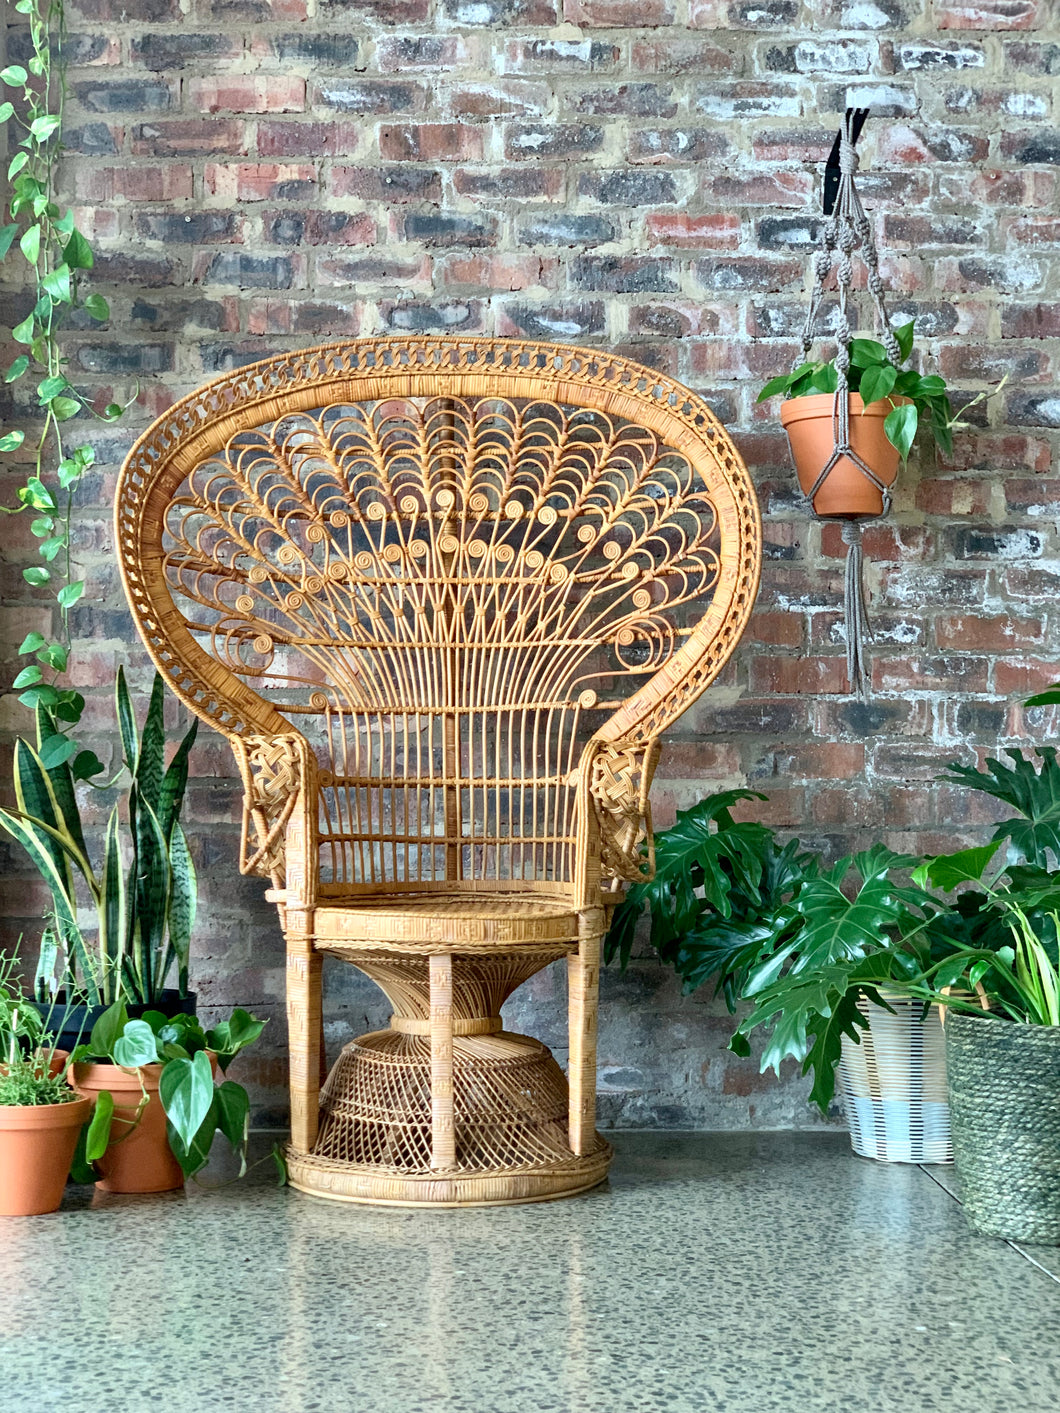 Vintage “Peacock” chair